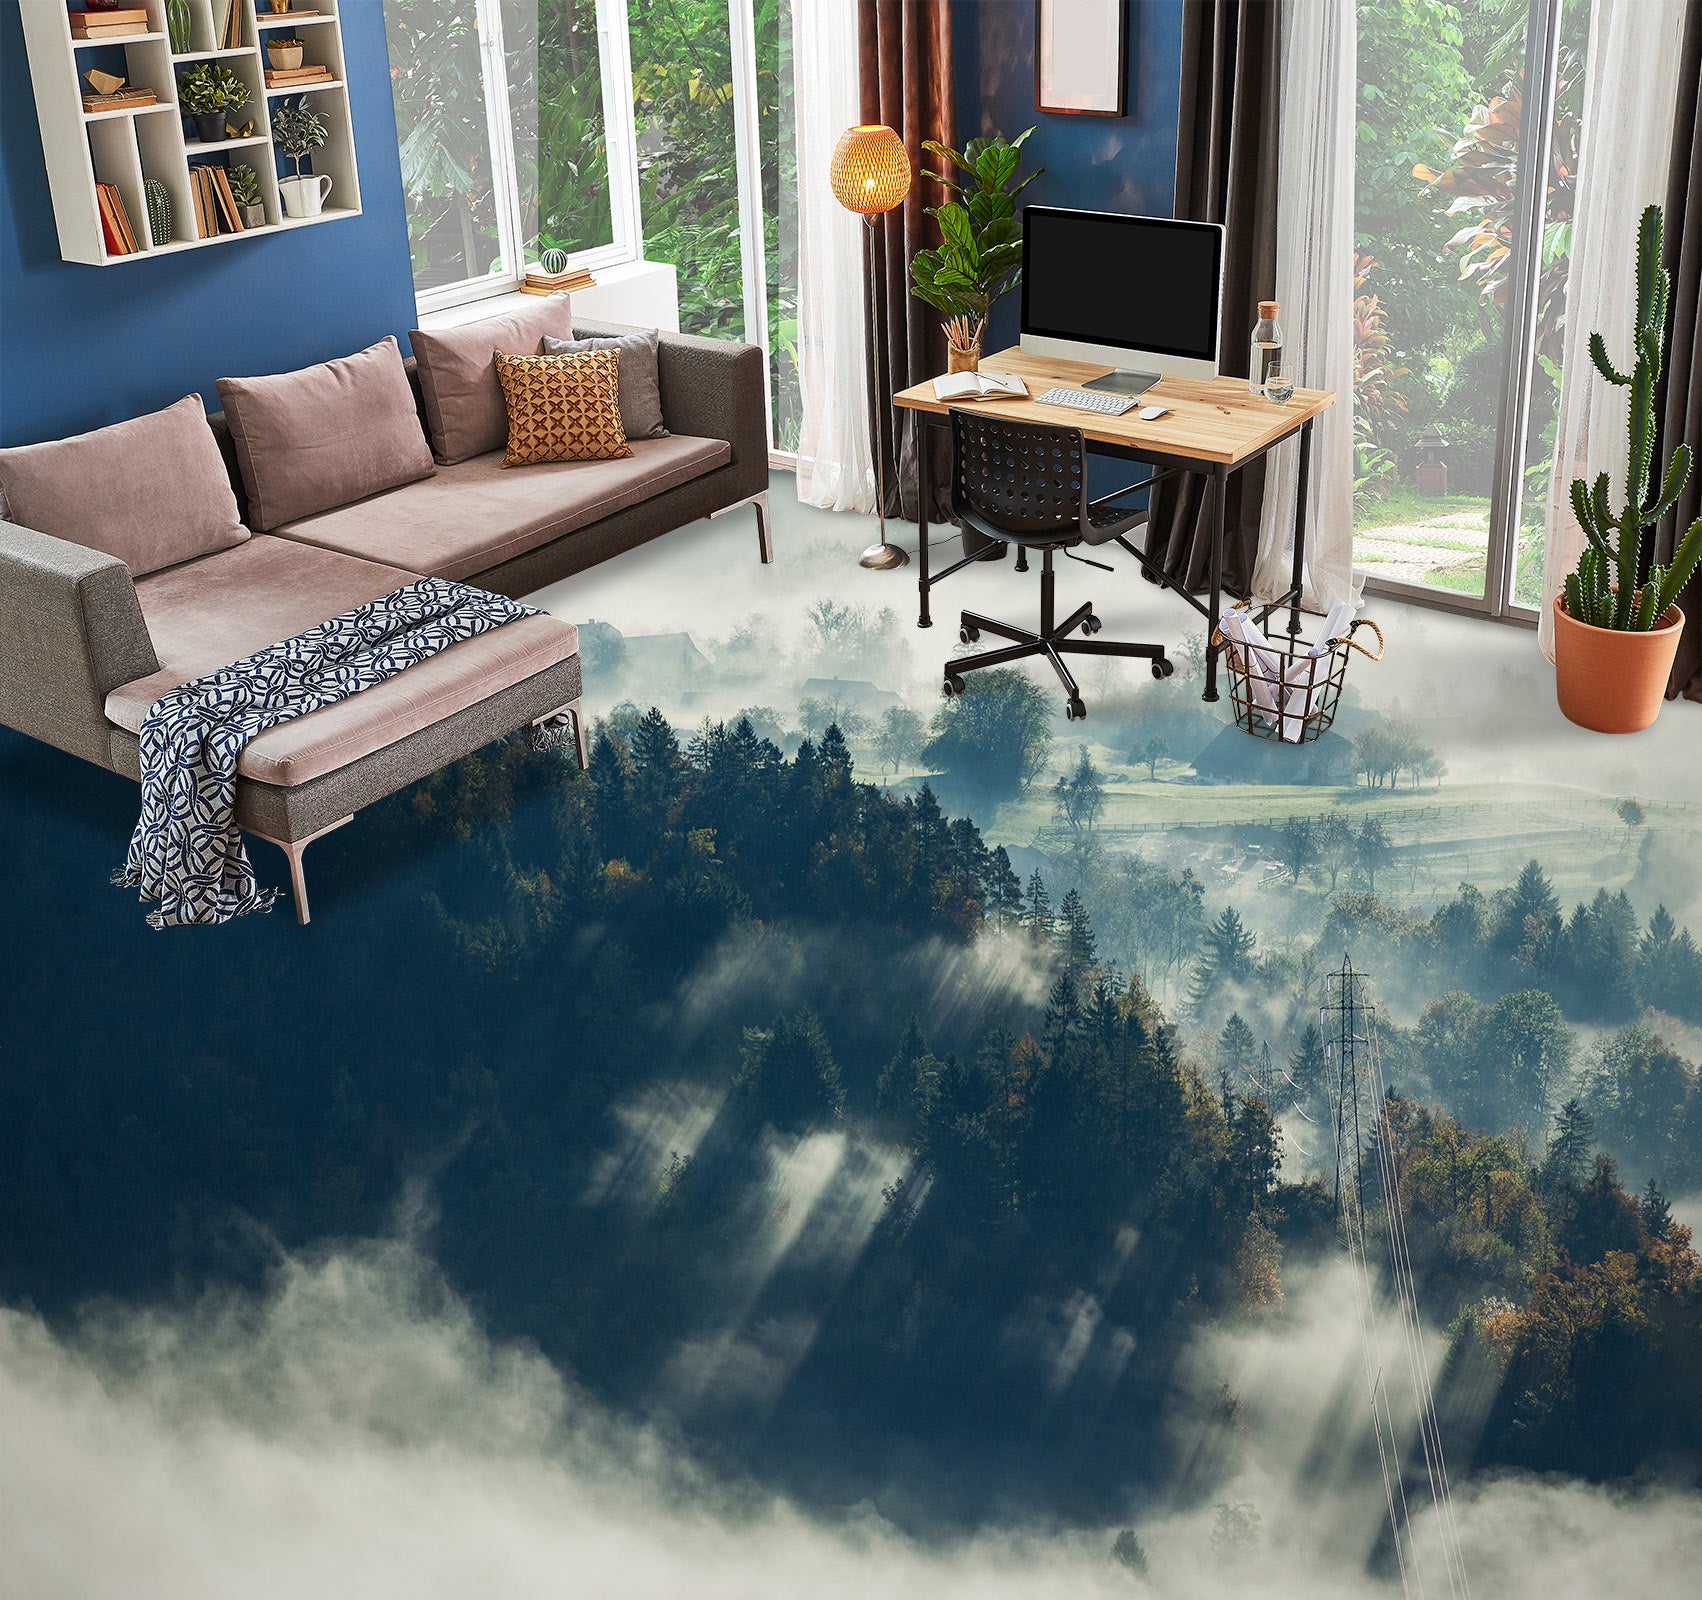 3D Artistic Landscape 1178 Floor Mural  Wallpaper Murals Self-Adhesive Removable Print Epoxy